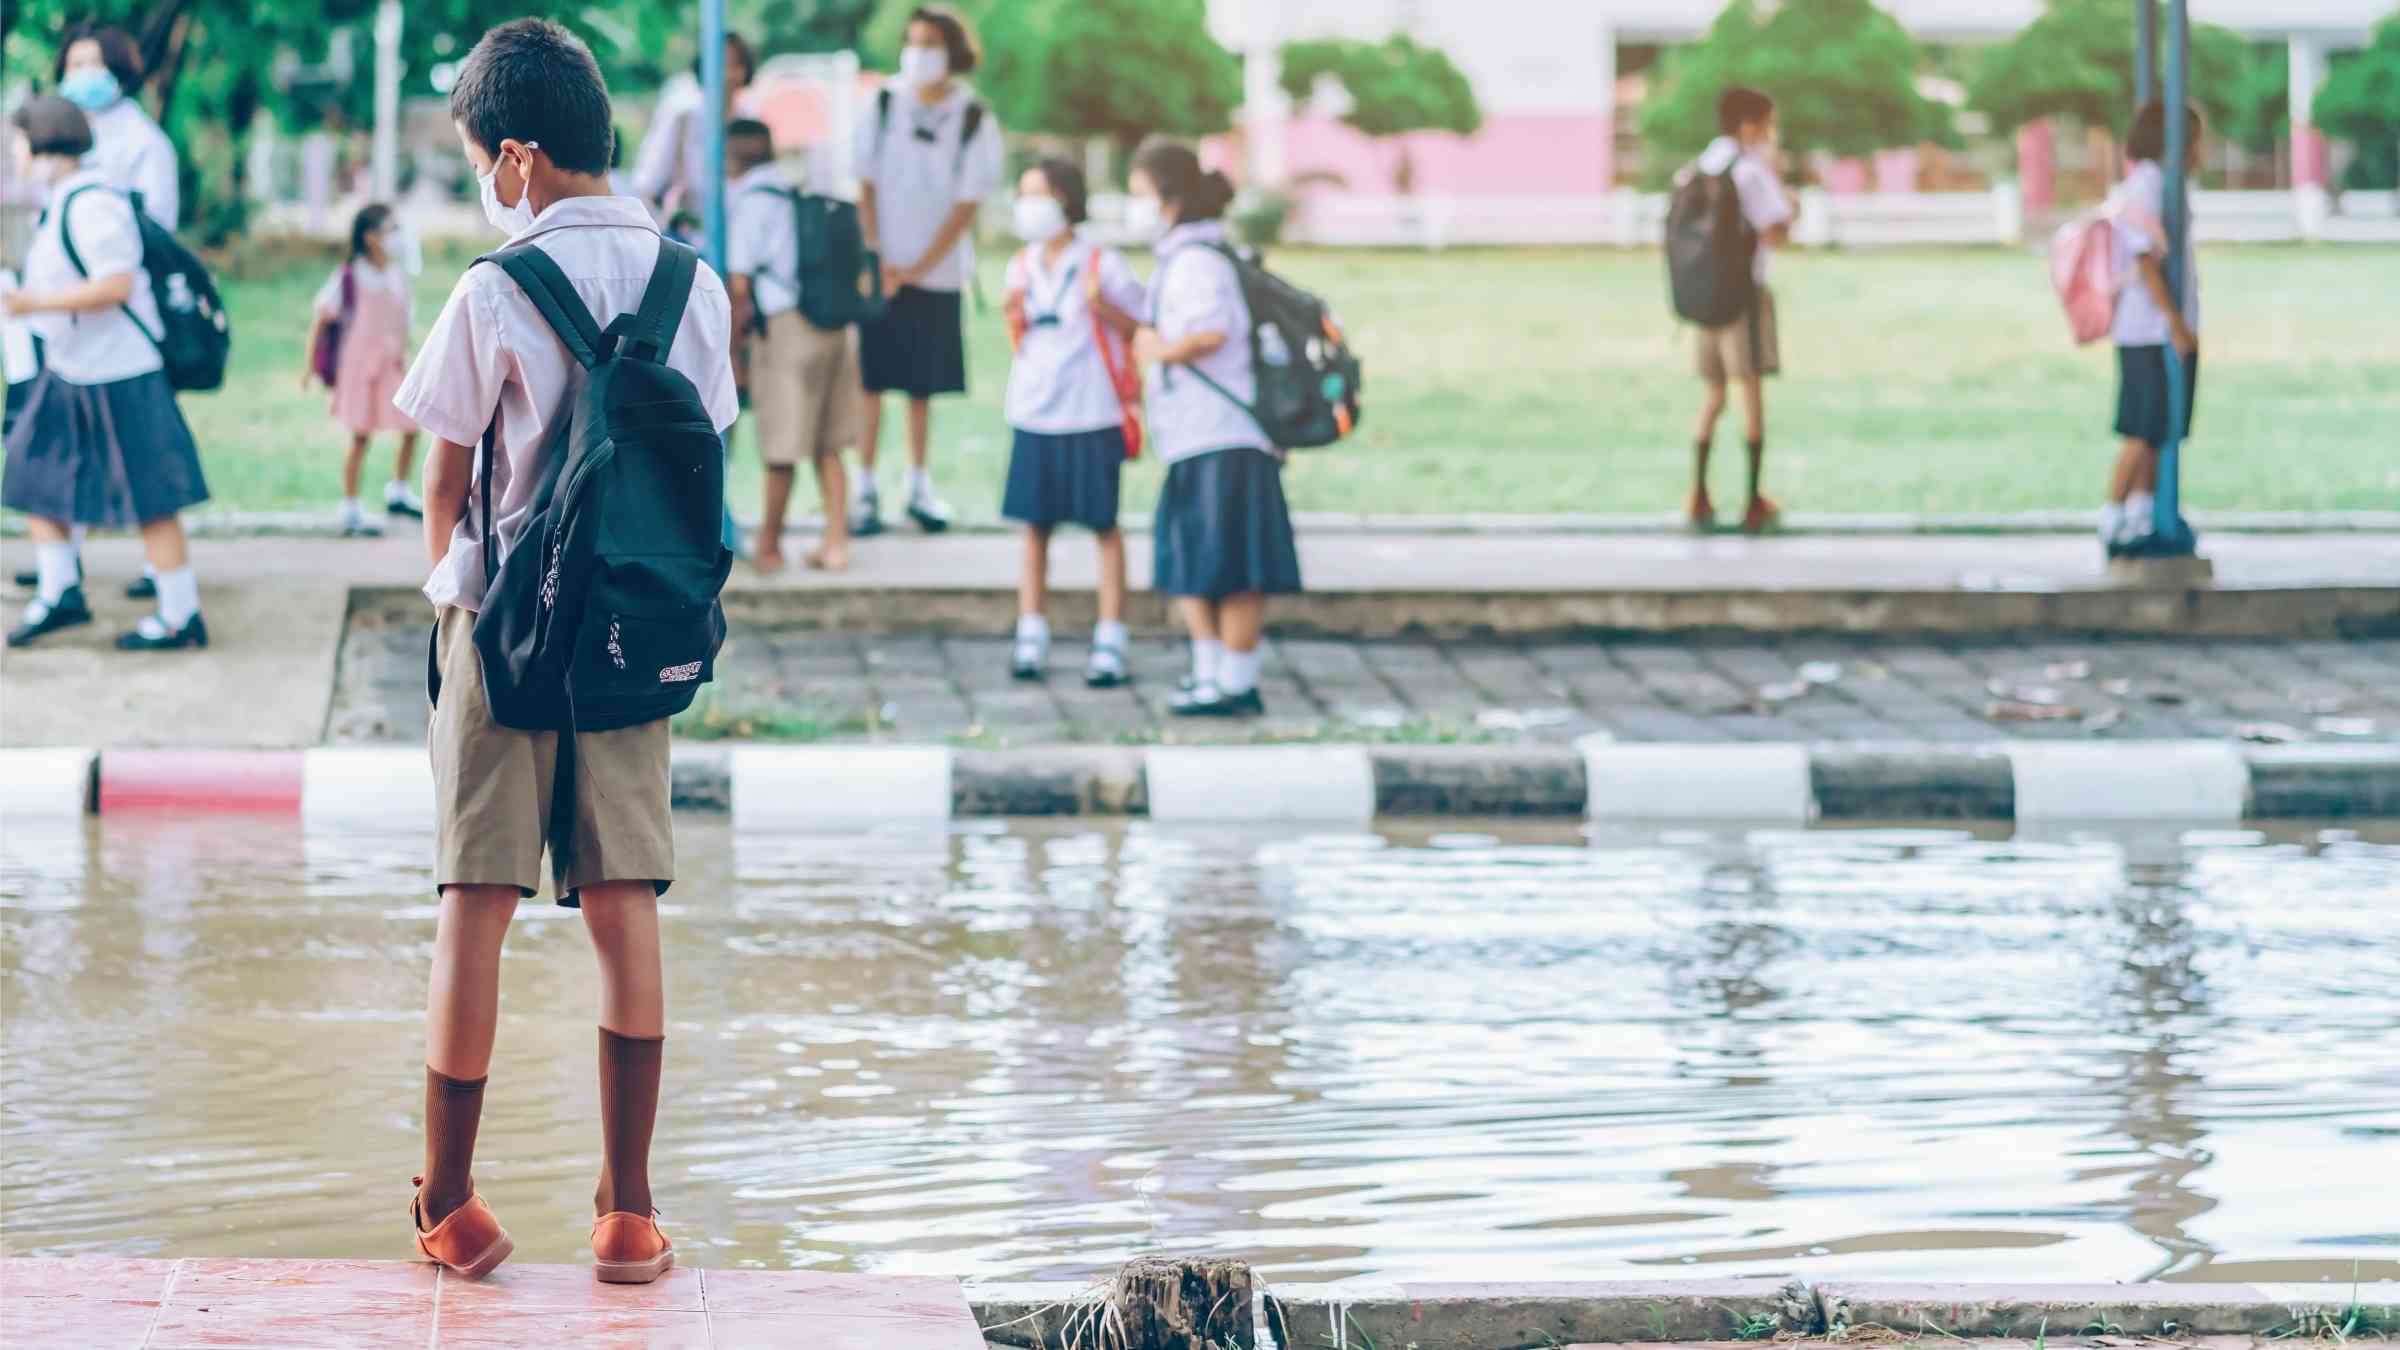 Students return home after heavy rains in Kanchanaburi, Thailand